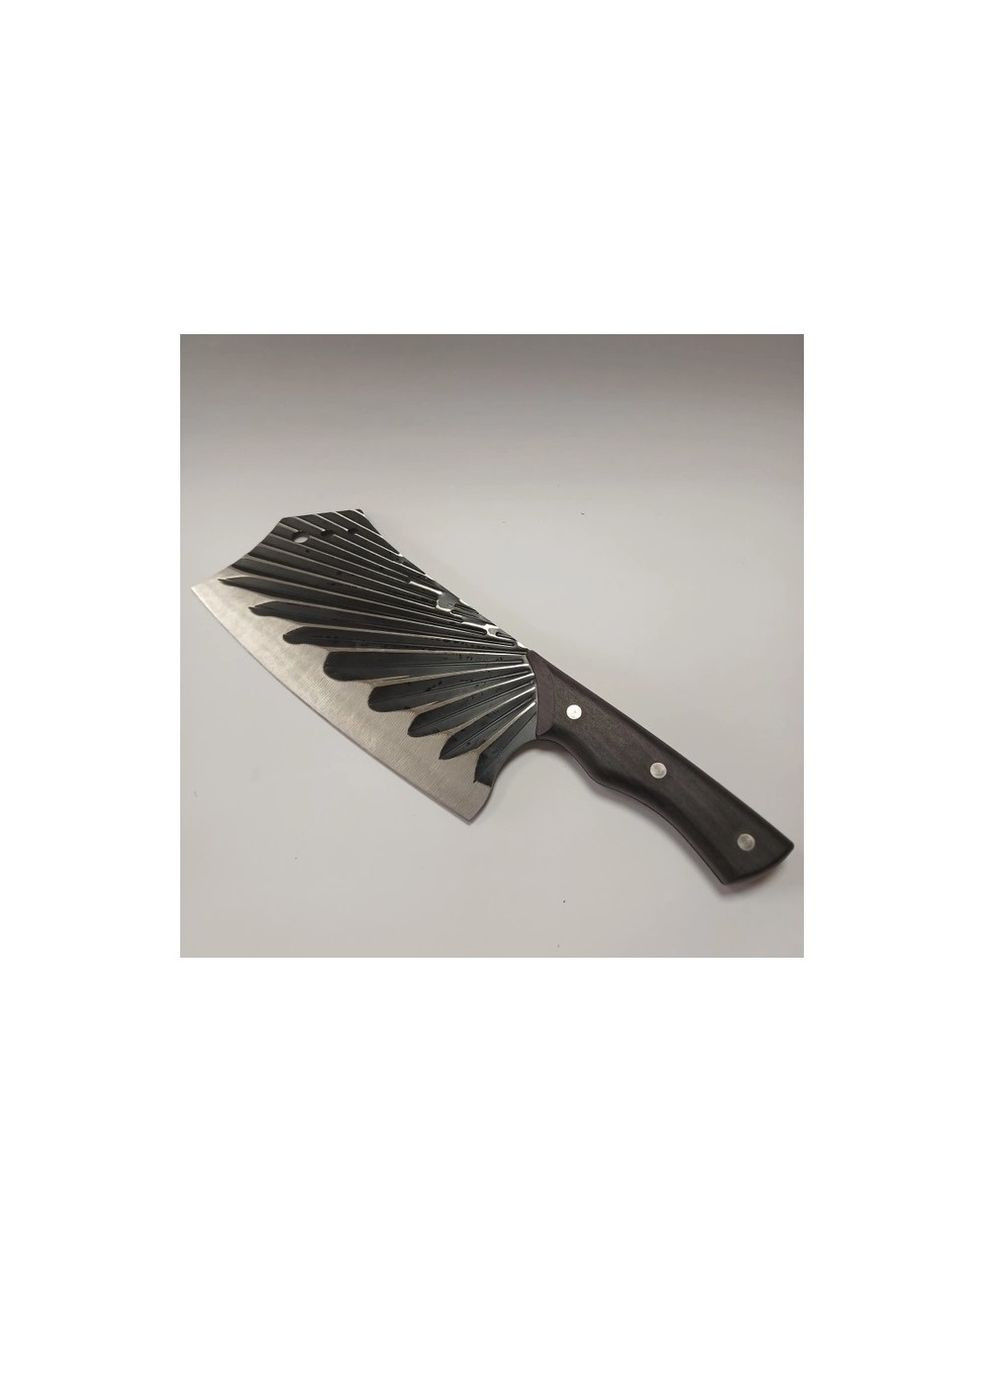 Кухонный нож-топорик 20х9 см кованая нержавеющая сталь Dynasty (280913399)